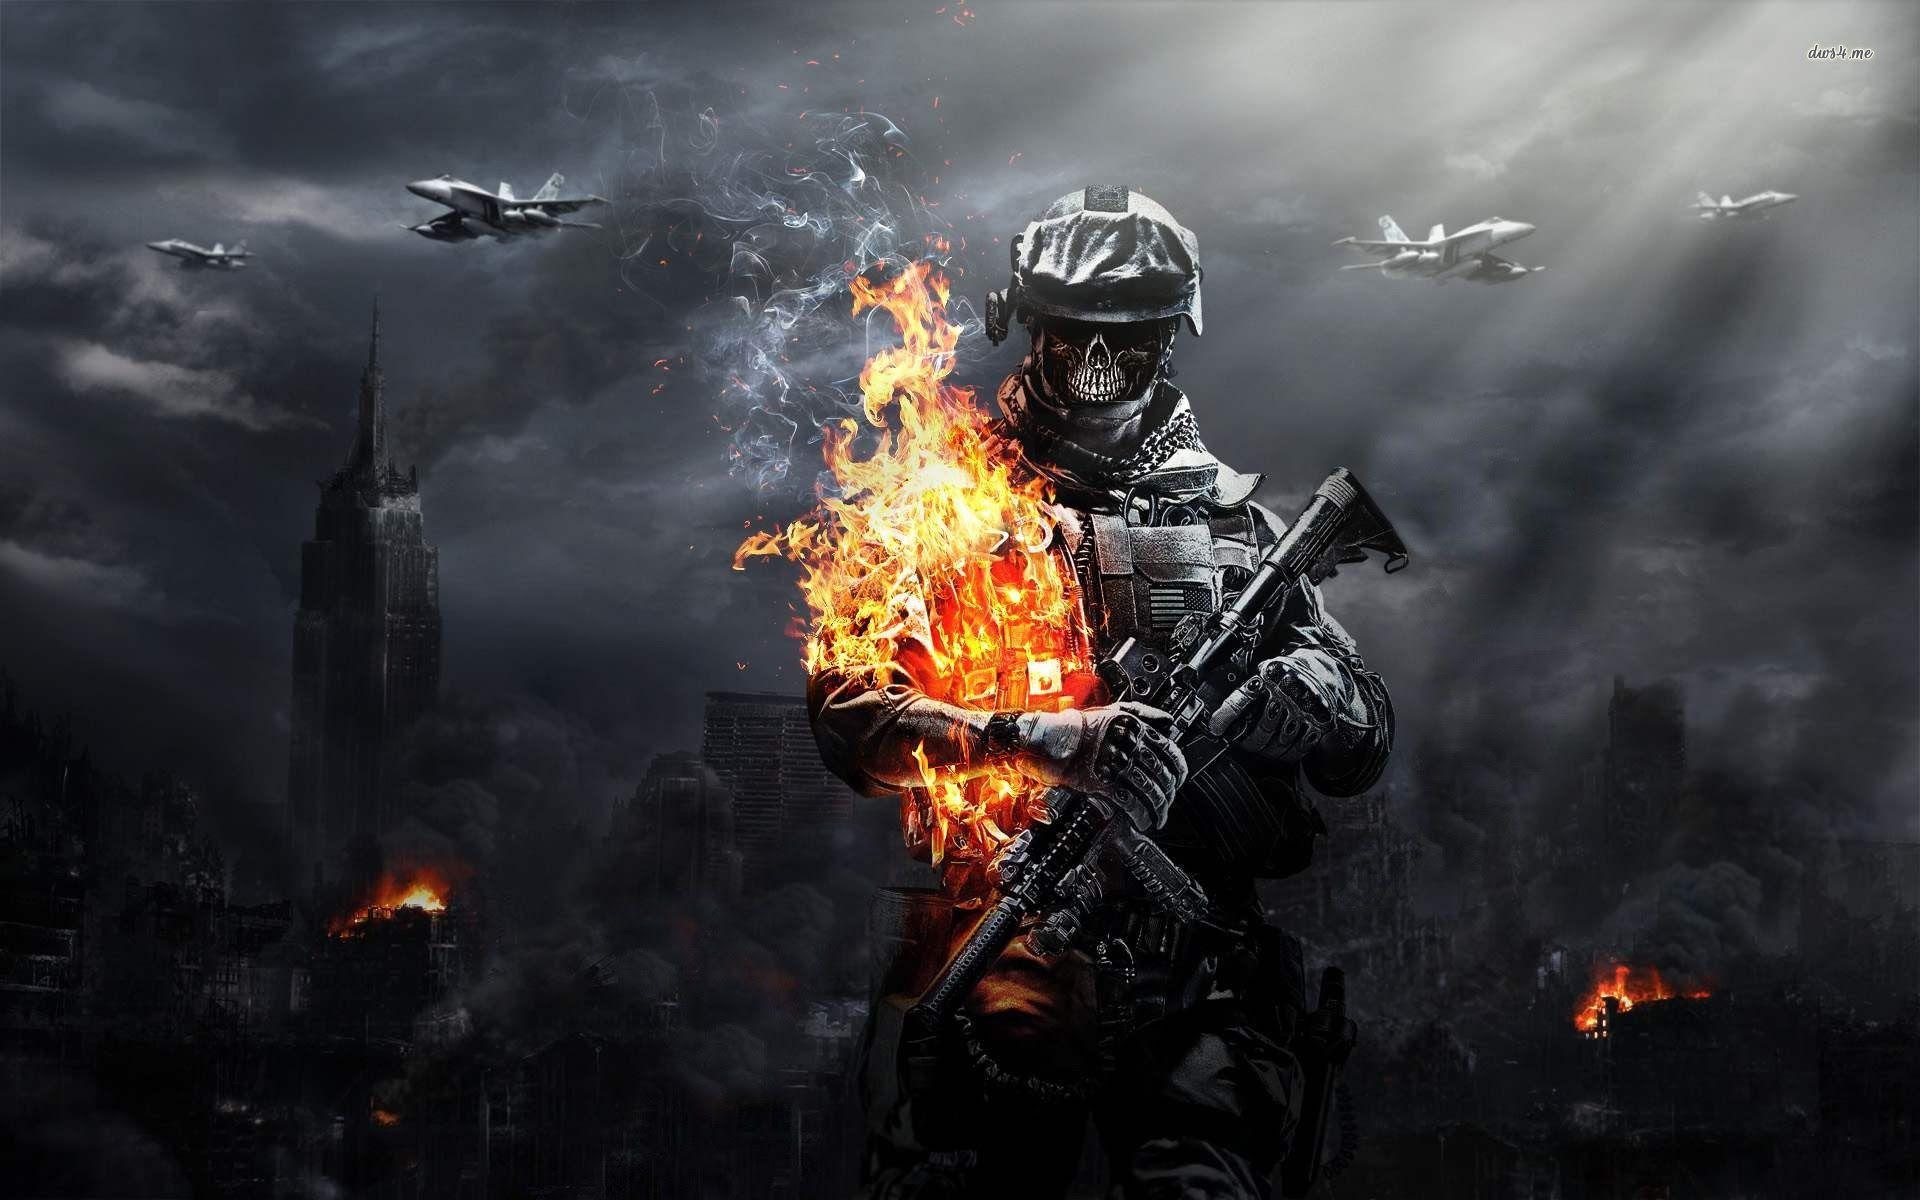 Battlefield 4 + Nvidia Geforce GTX 980 SLI Asus Strix + G SYNC +